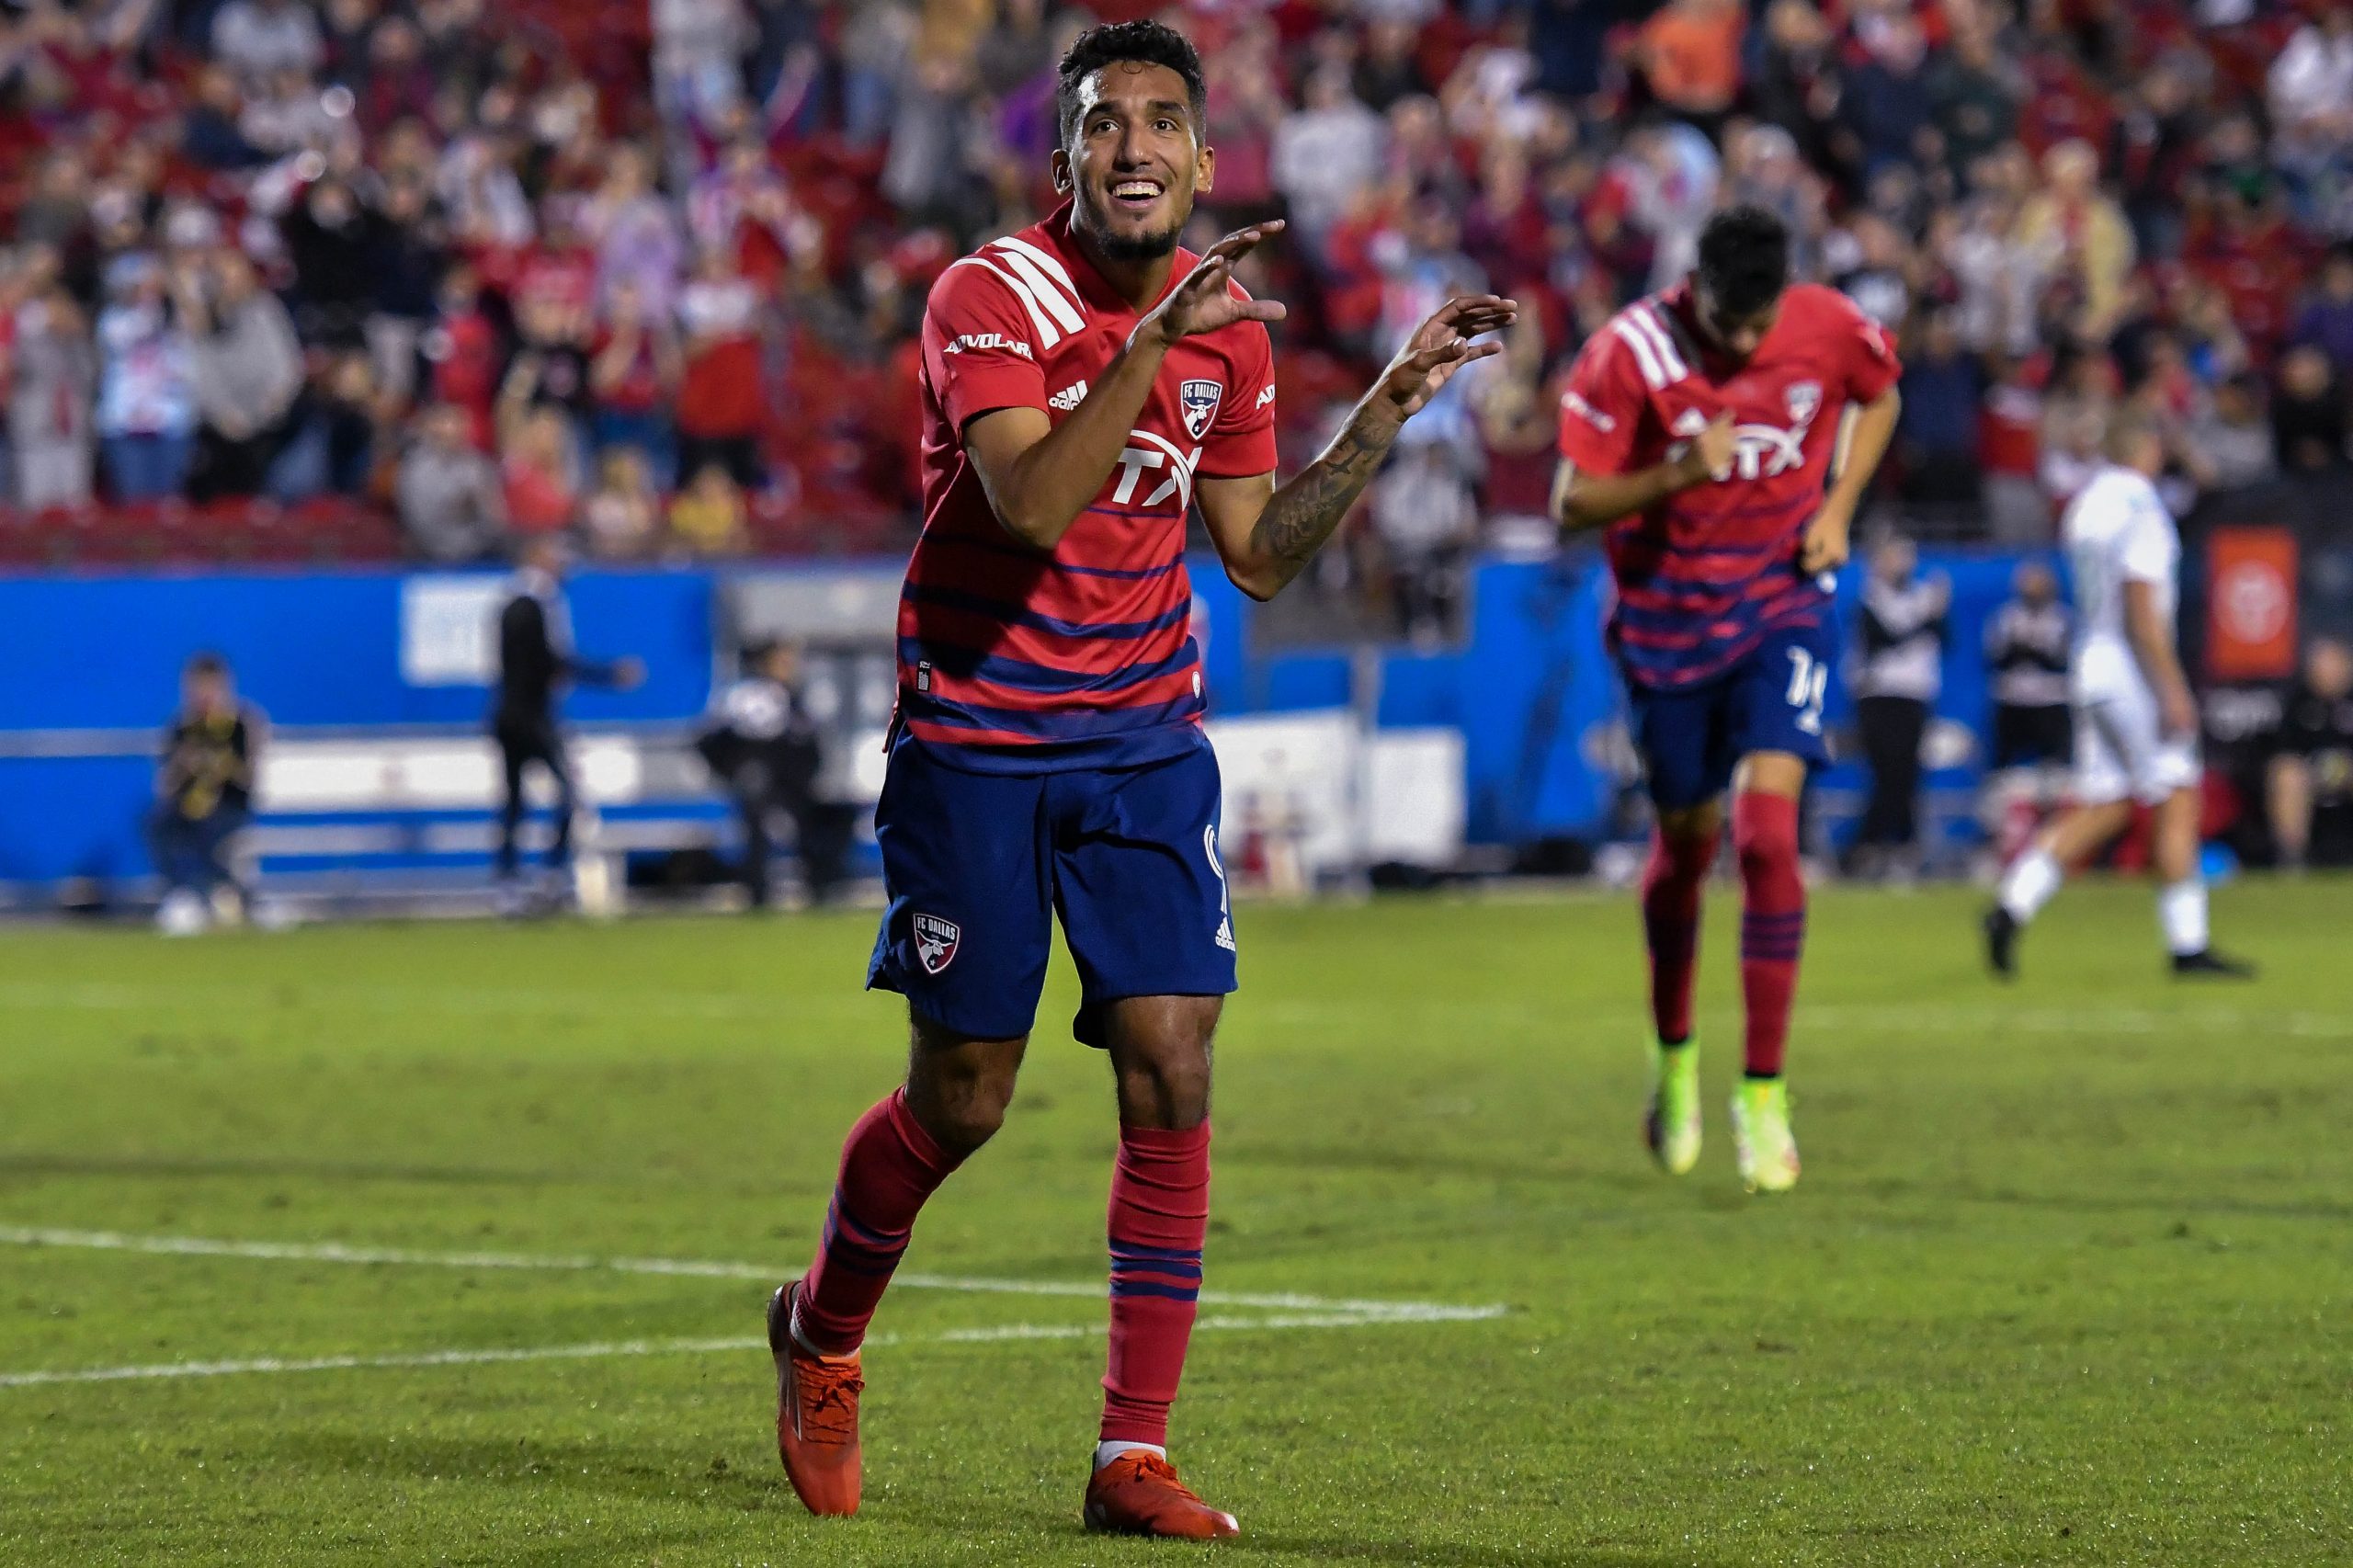 Jesus Ferreira celebrates after scoring in the MLS match against Austin FC.